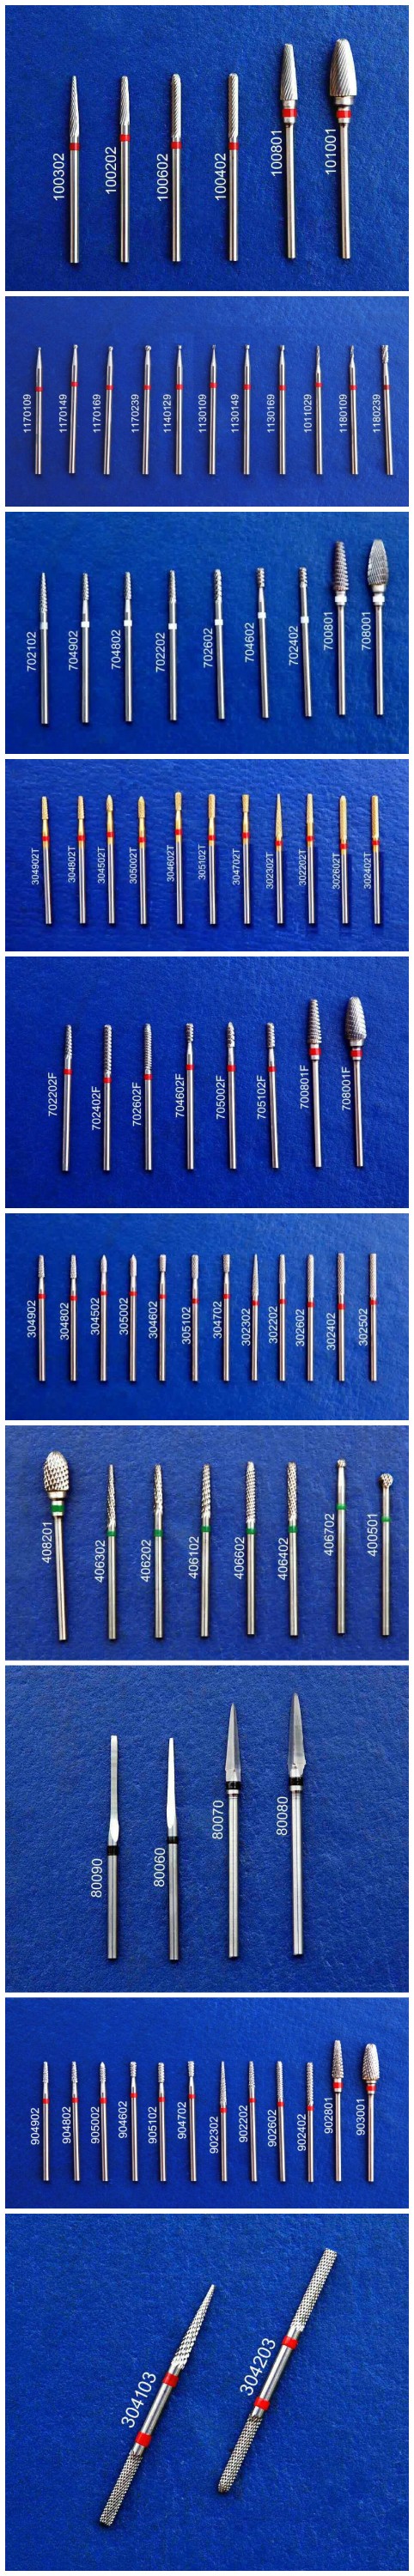 Wholesale Professional Ceramic Nail art Manicure Machine Tool Nails Electric Drill Bits File Kit